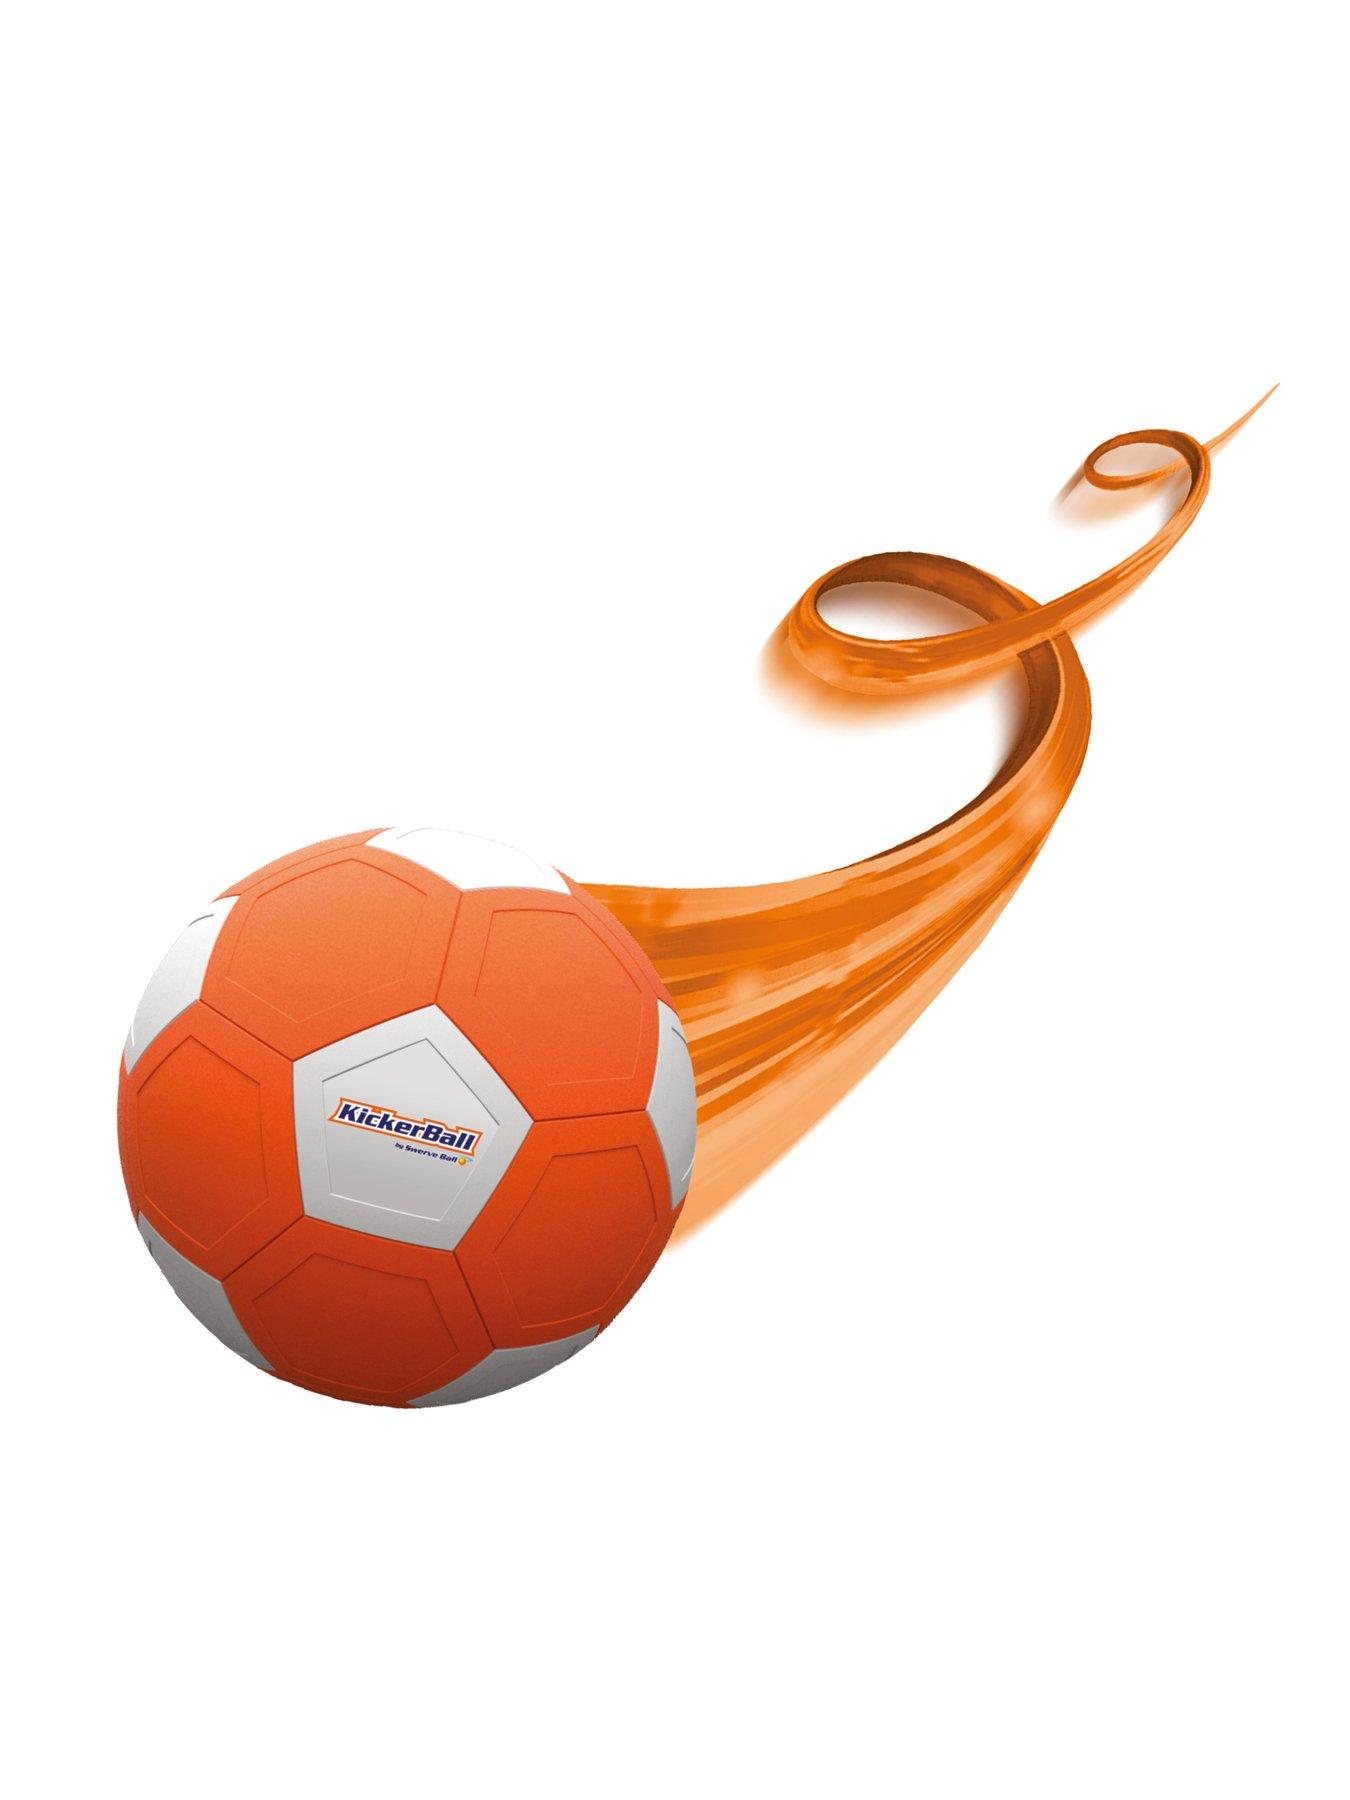 Swerve Ball-Kickerball